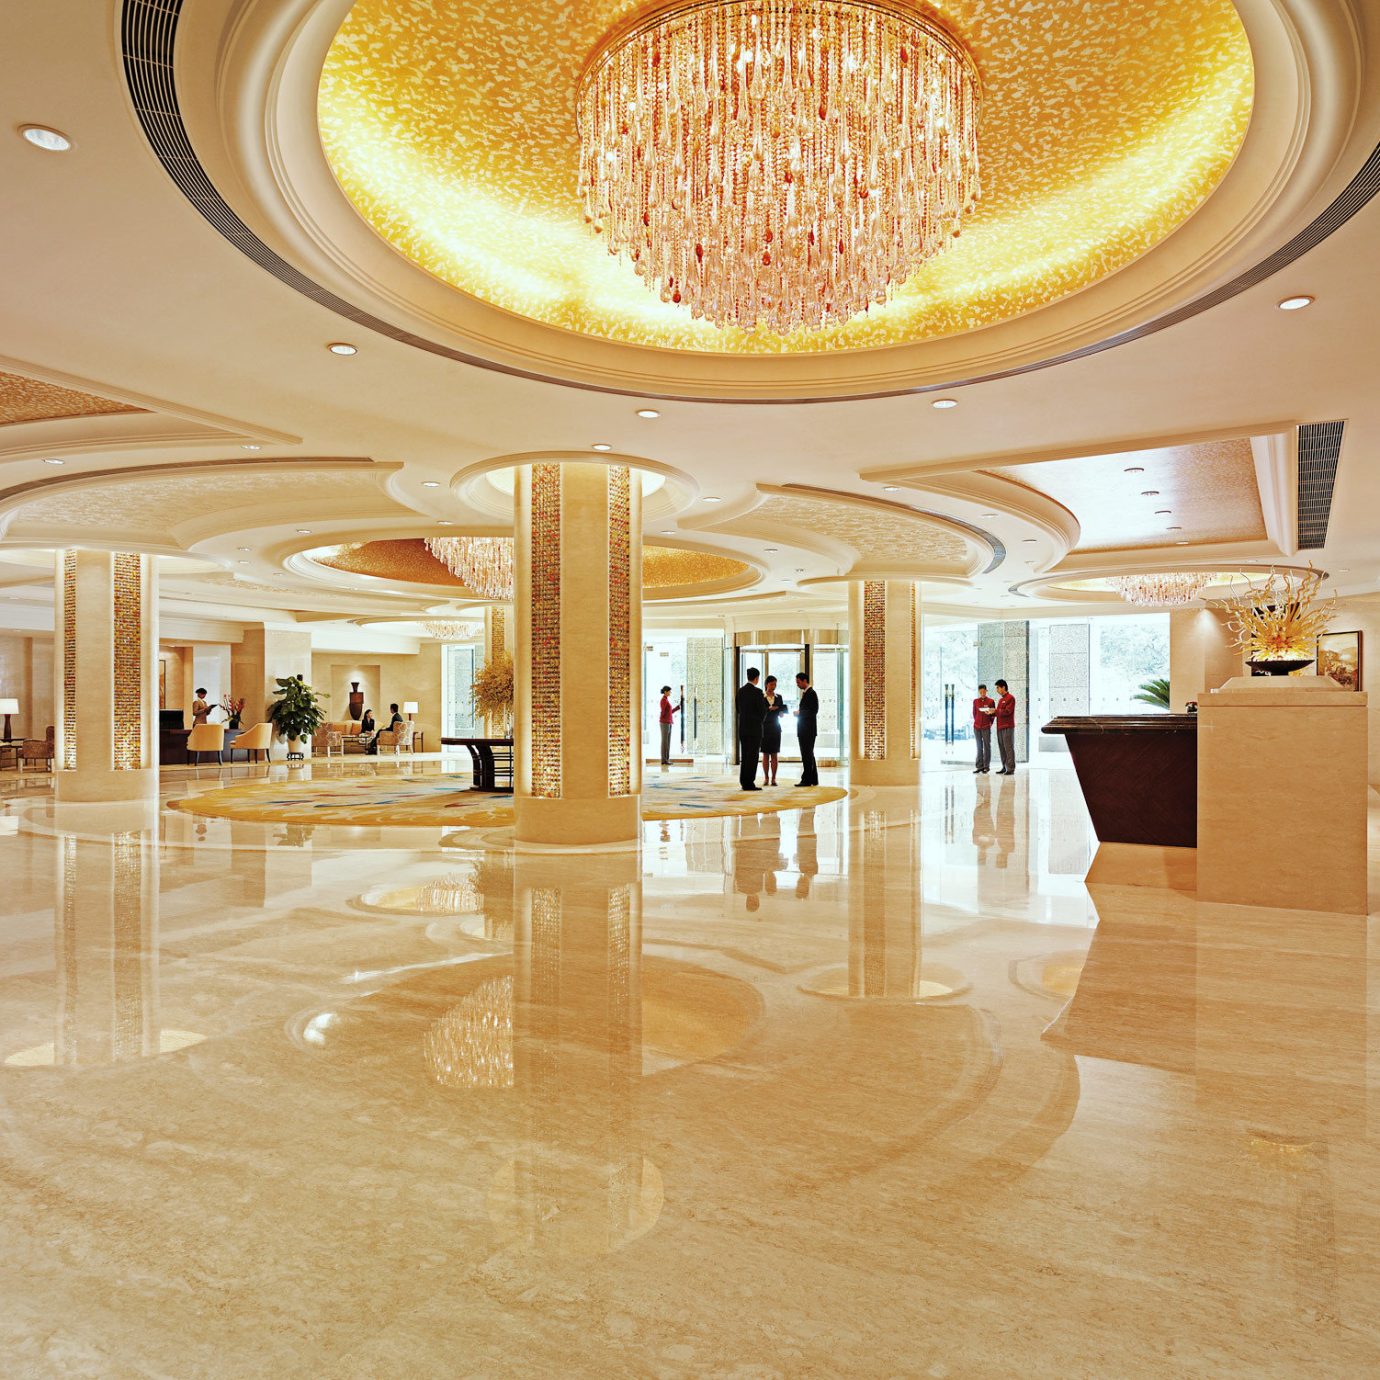 Elegant Lobby Luxury flooring ballroom shopping mall hall tourist attraction